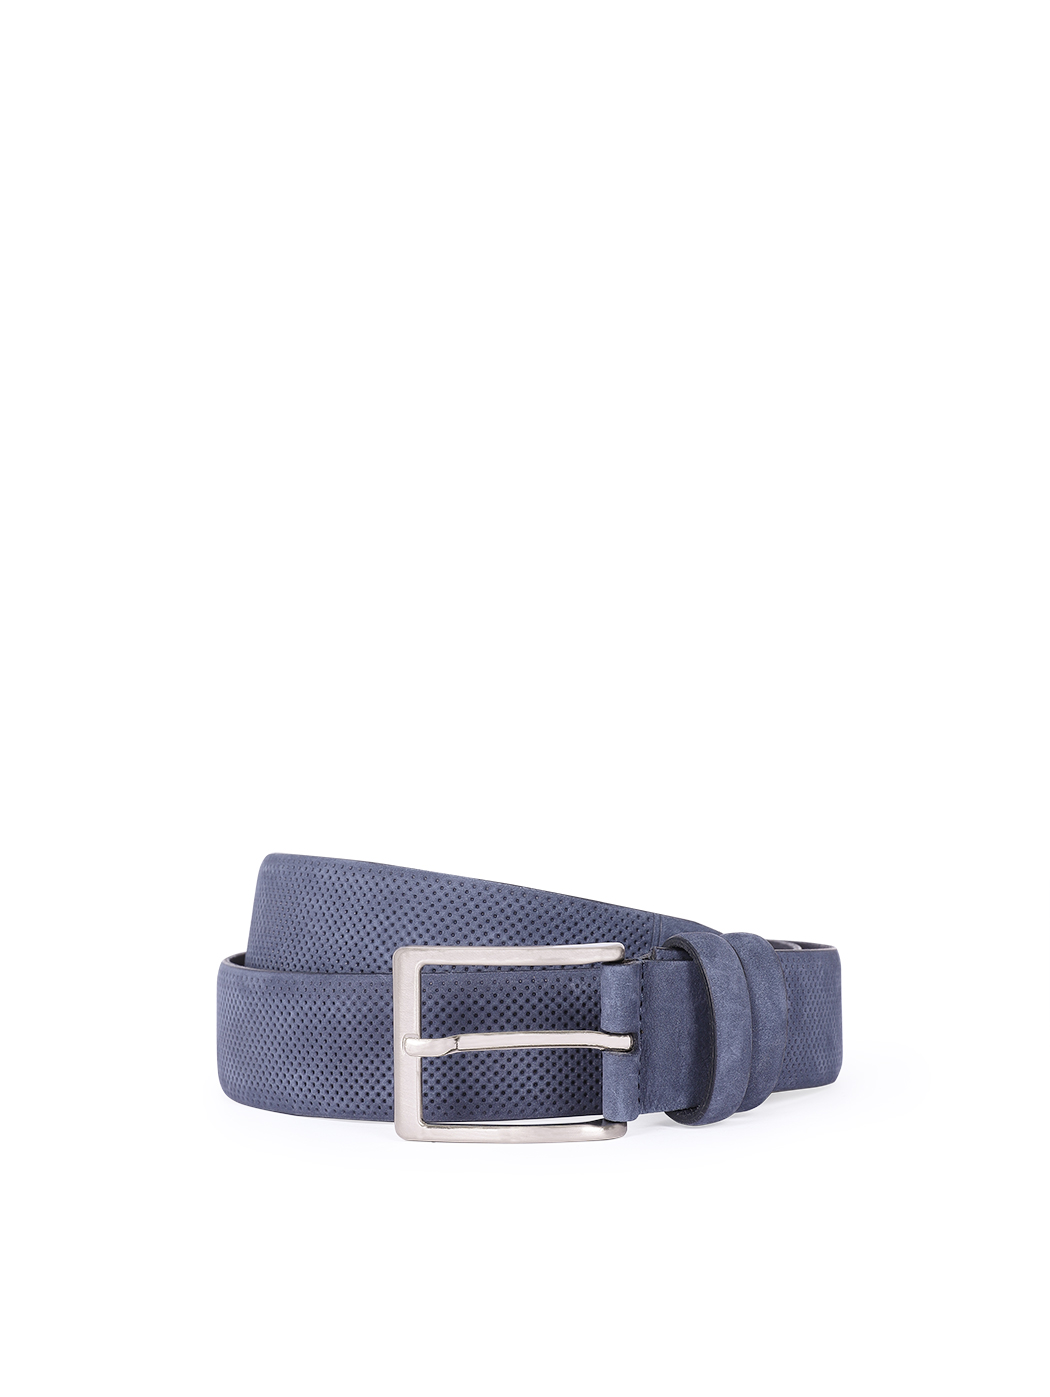 Cintura blu in pelle Nubuck con stampa a puntini